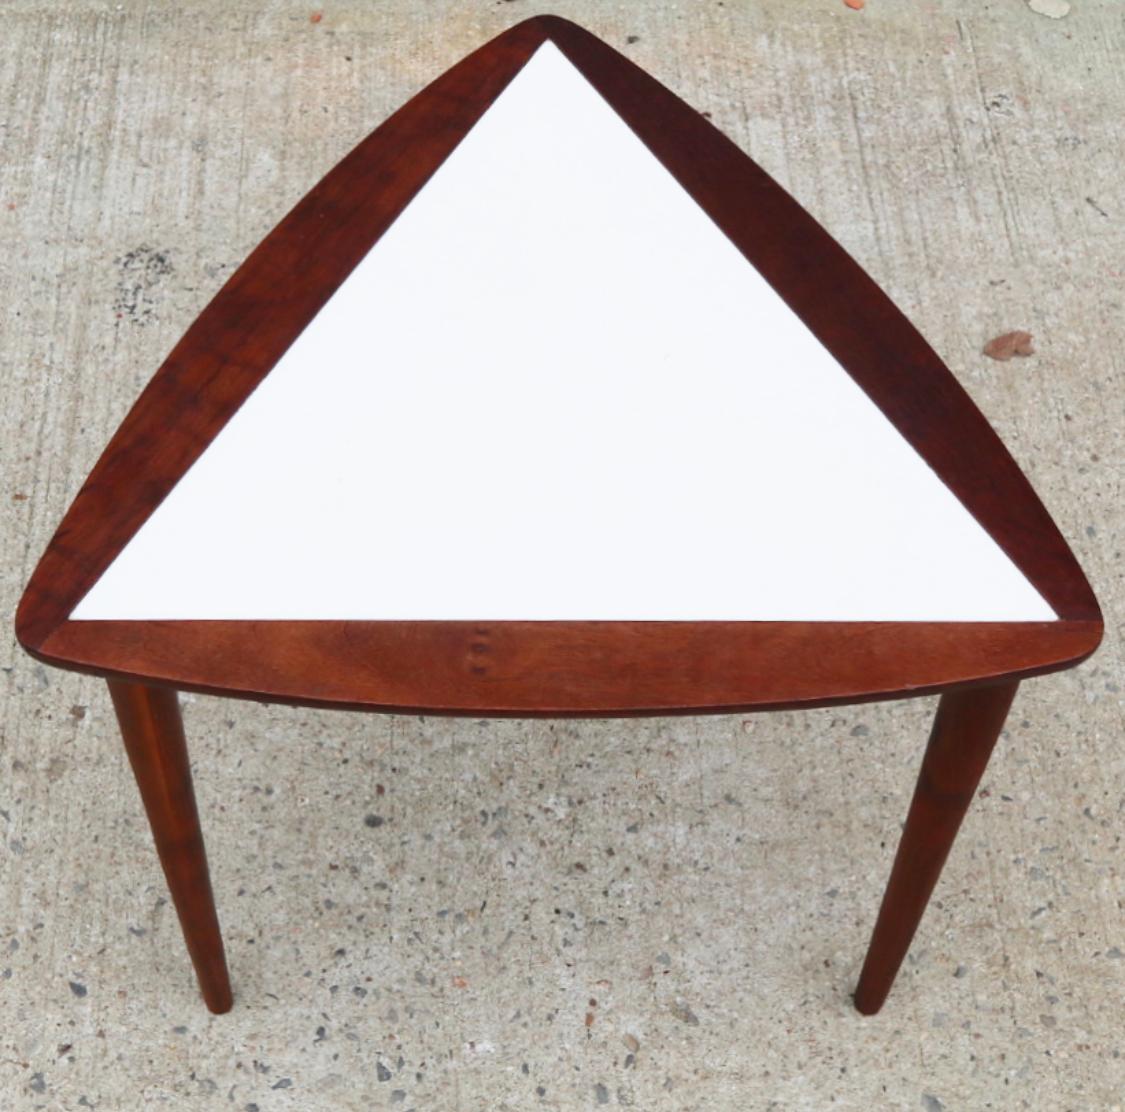 Gorgeous walnut triangular side table designed by Arthur Umanoff. Deep walnut wood finish with rich patina.